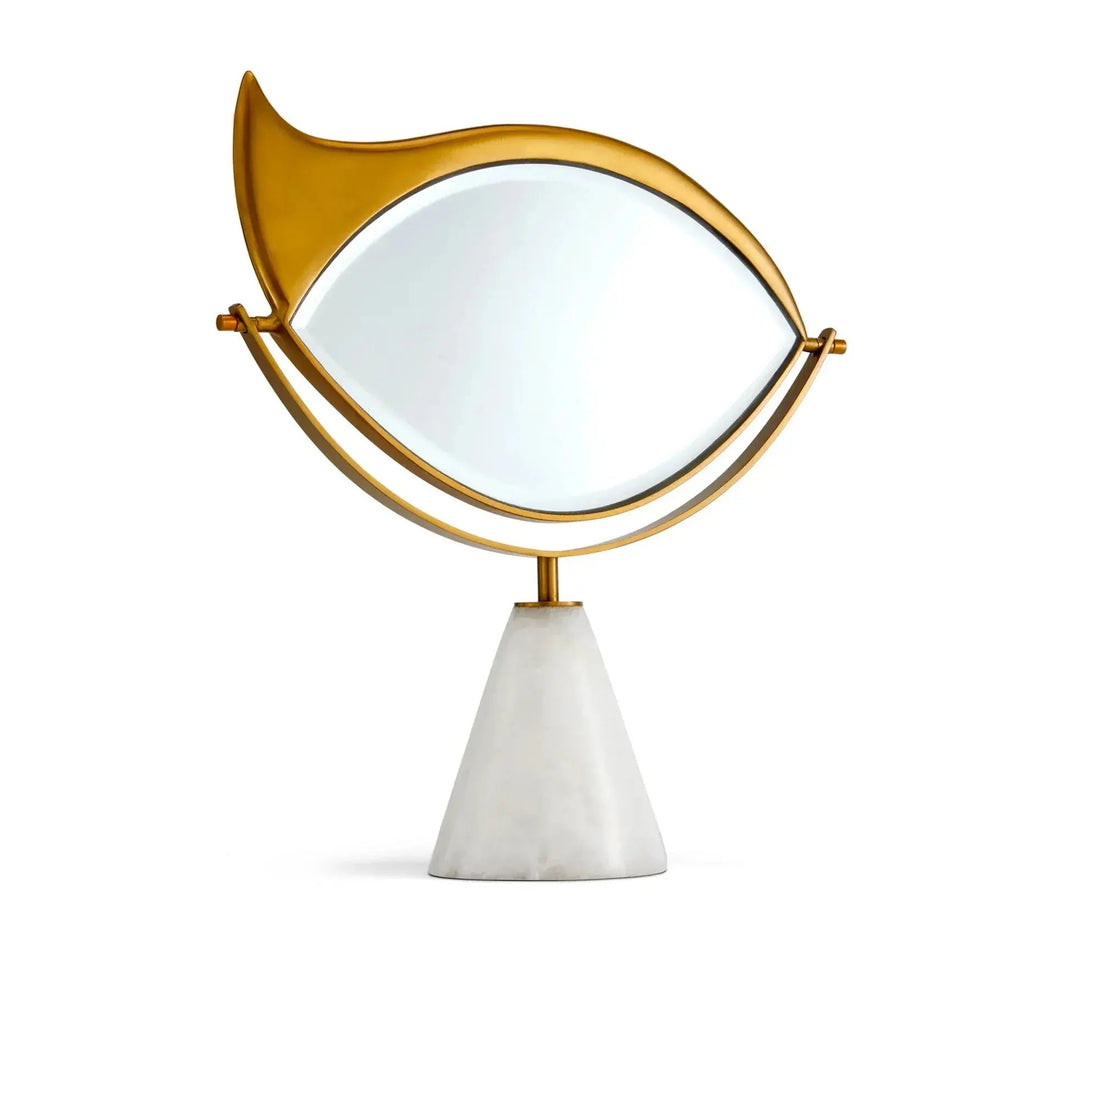 The objet Lito Vanity Mirror The Objet 1 Piece